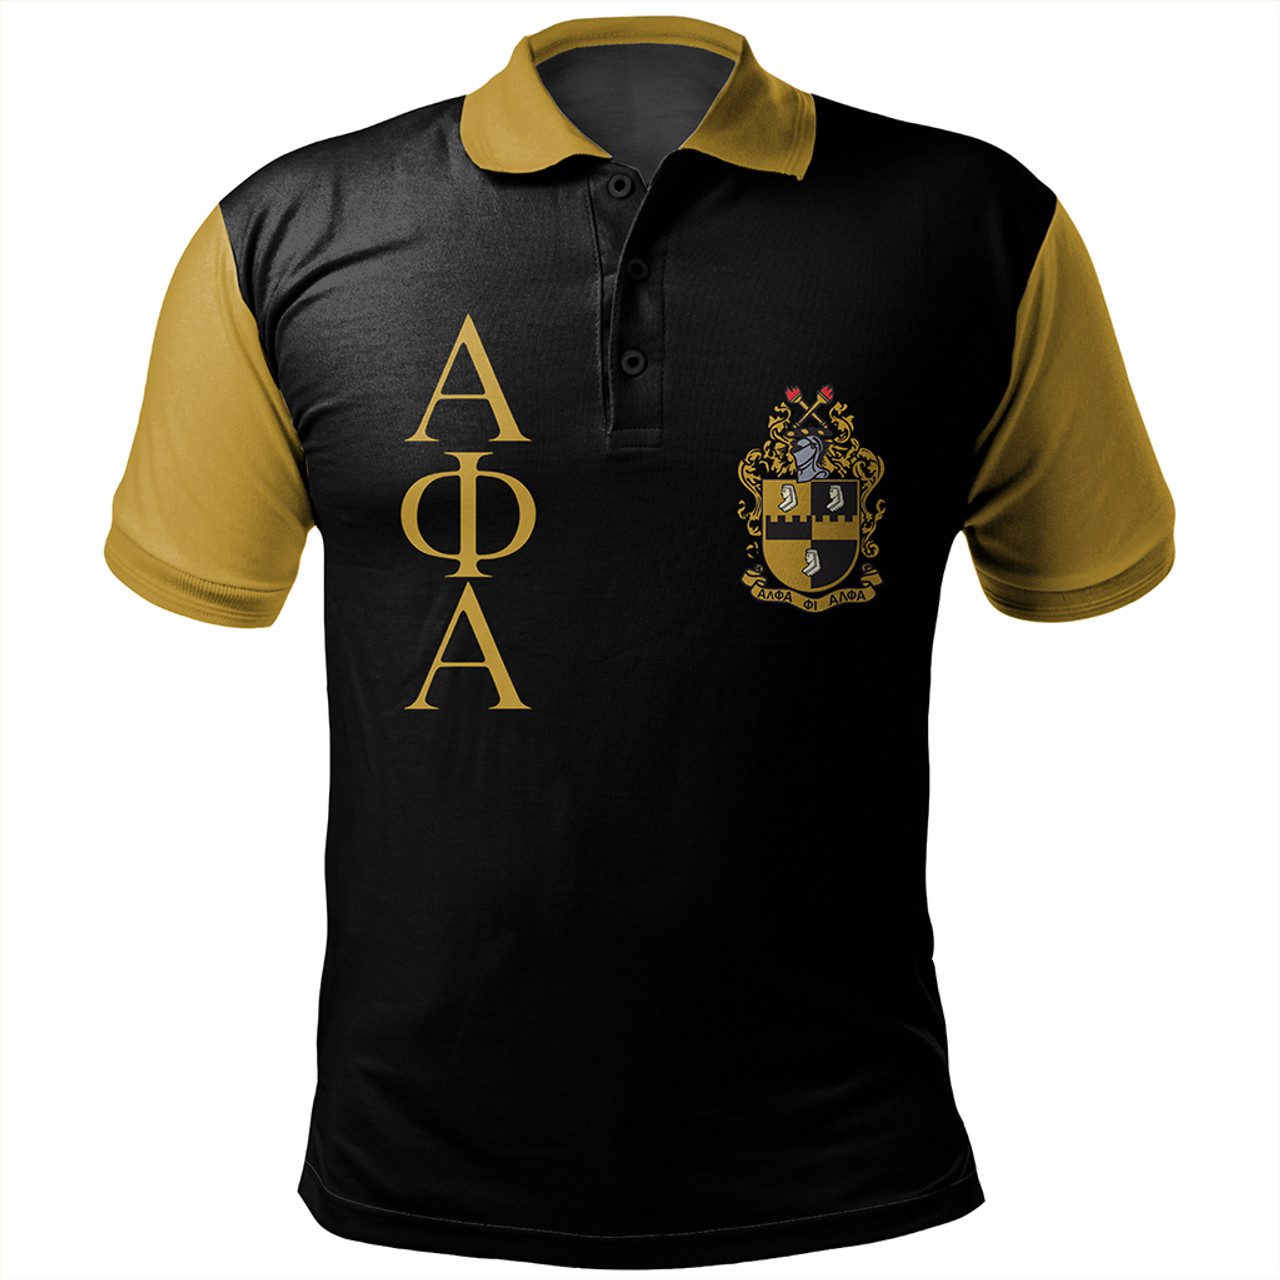 Alpha Phi Alpha Polo Shirt Royal